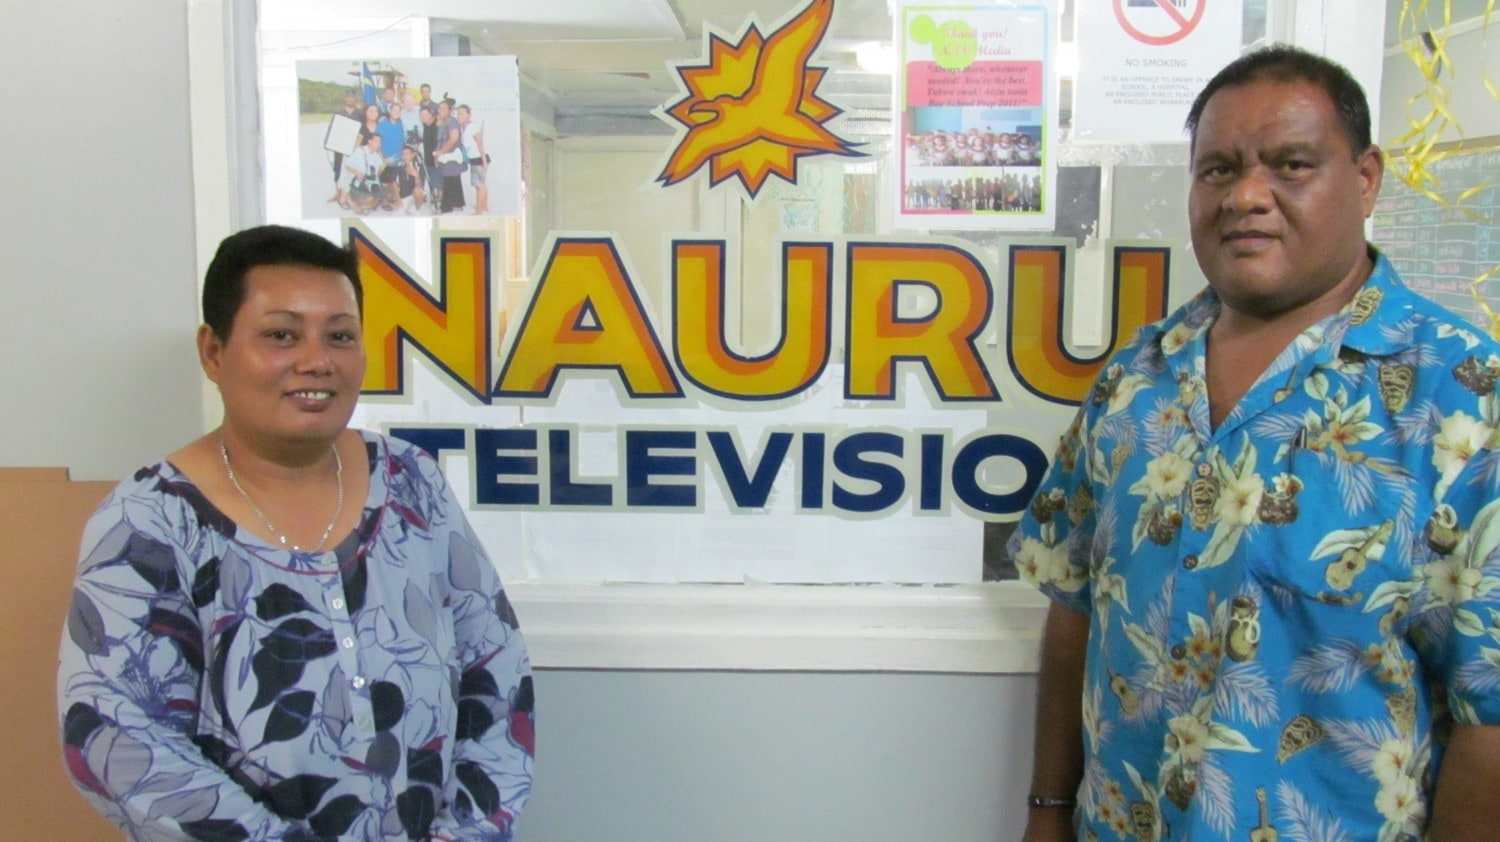 Nauru Media Bureau Assistant Director, Sharain Hiram and Radio Nauru Editor, Dominic Appi, PFF/Pacmas